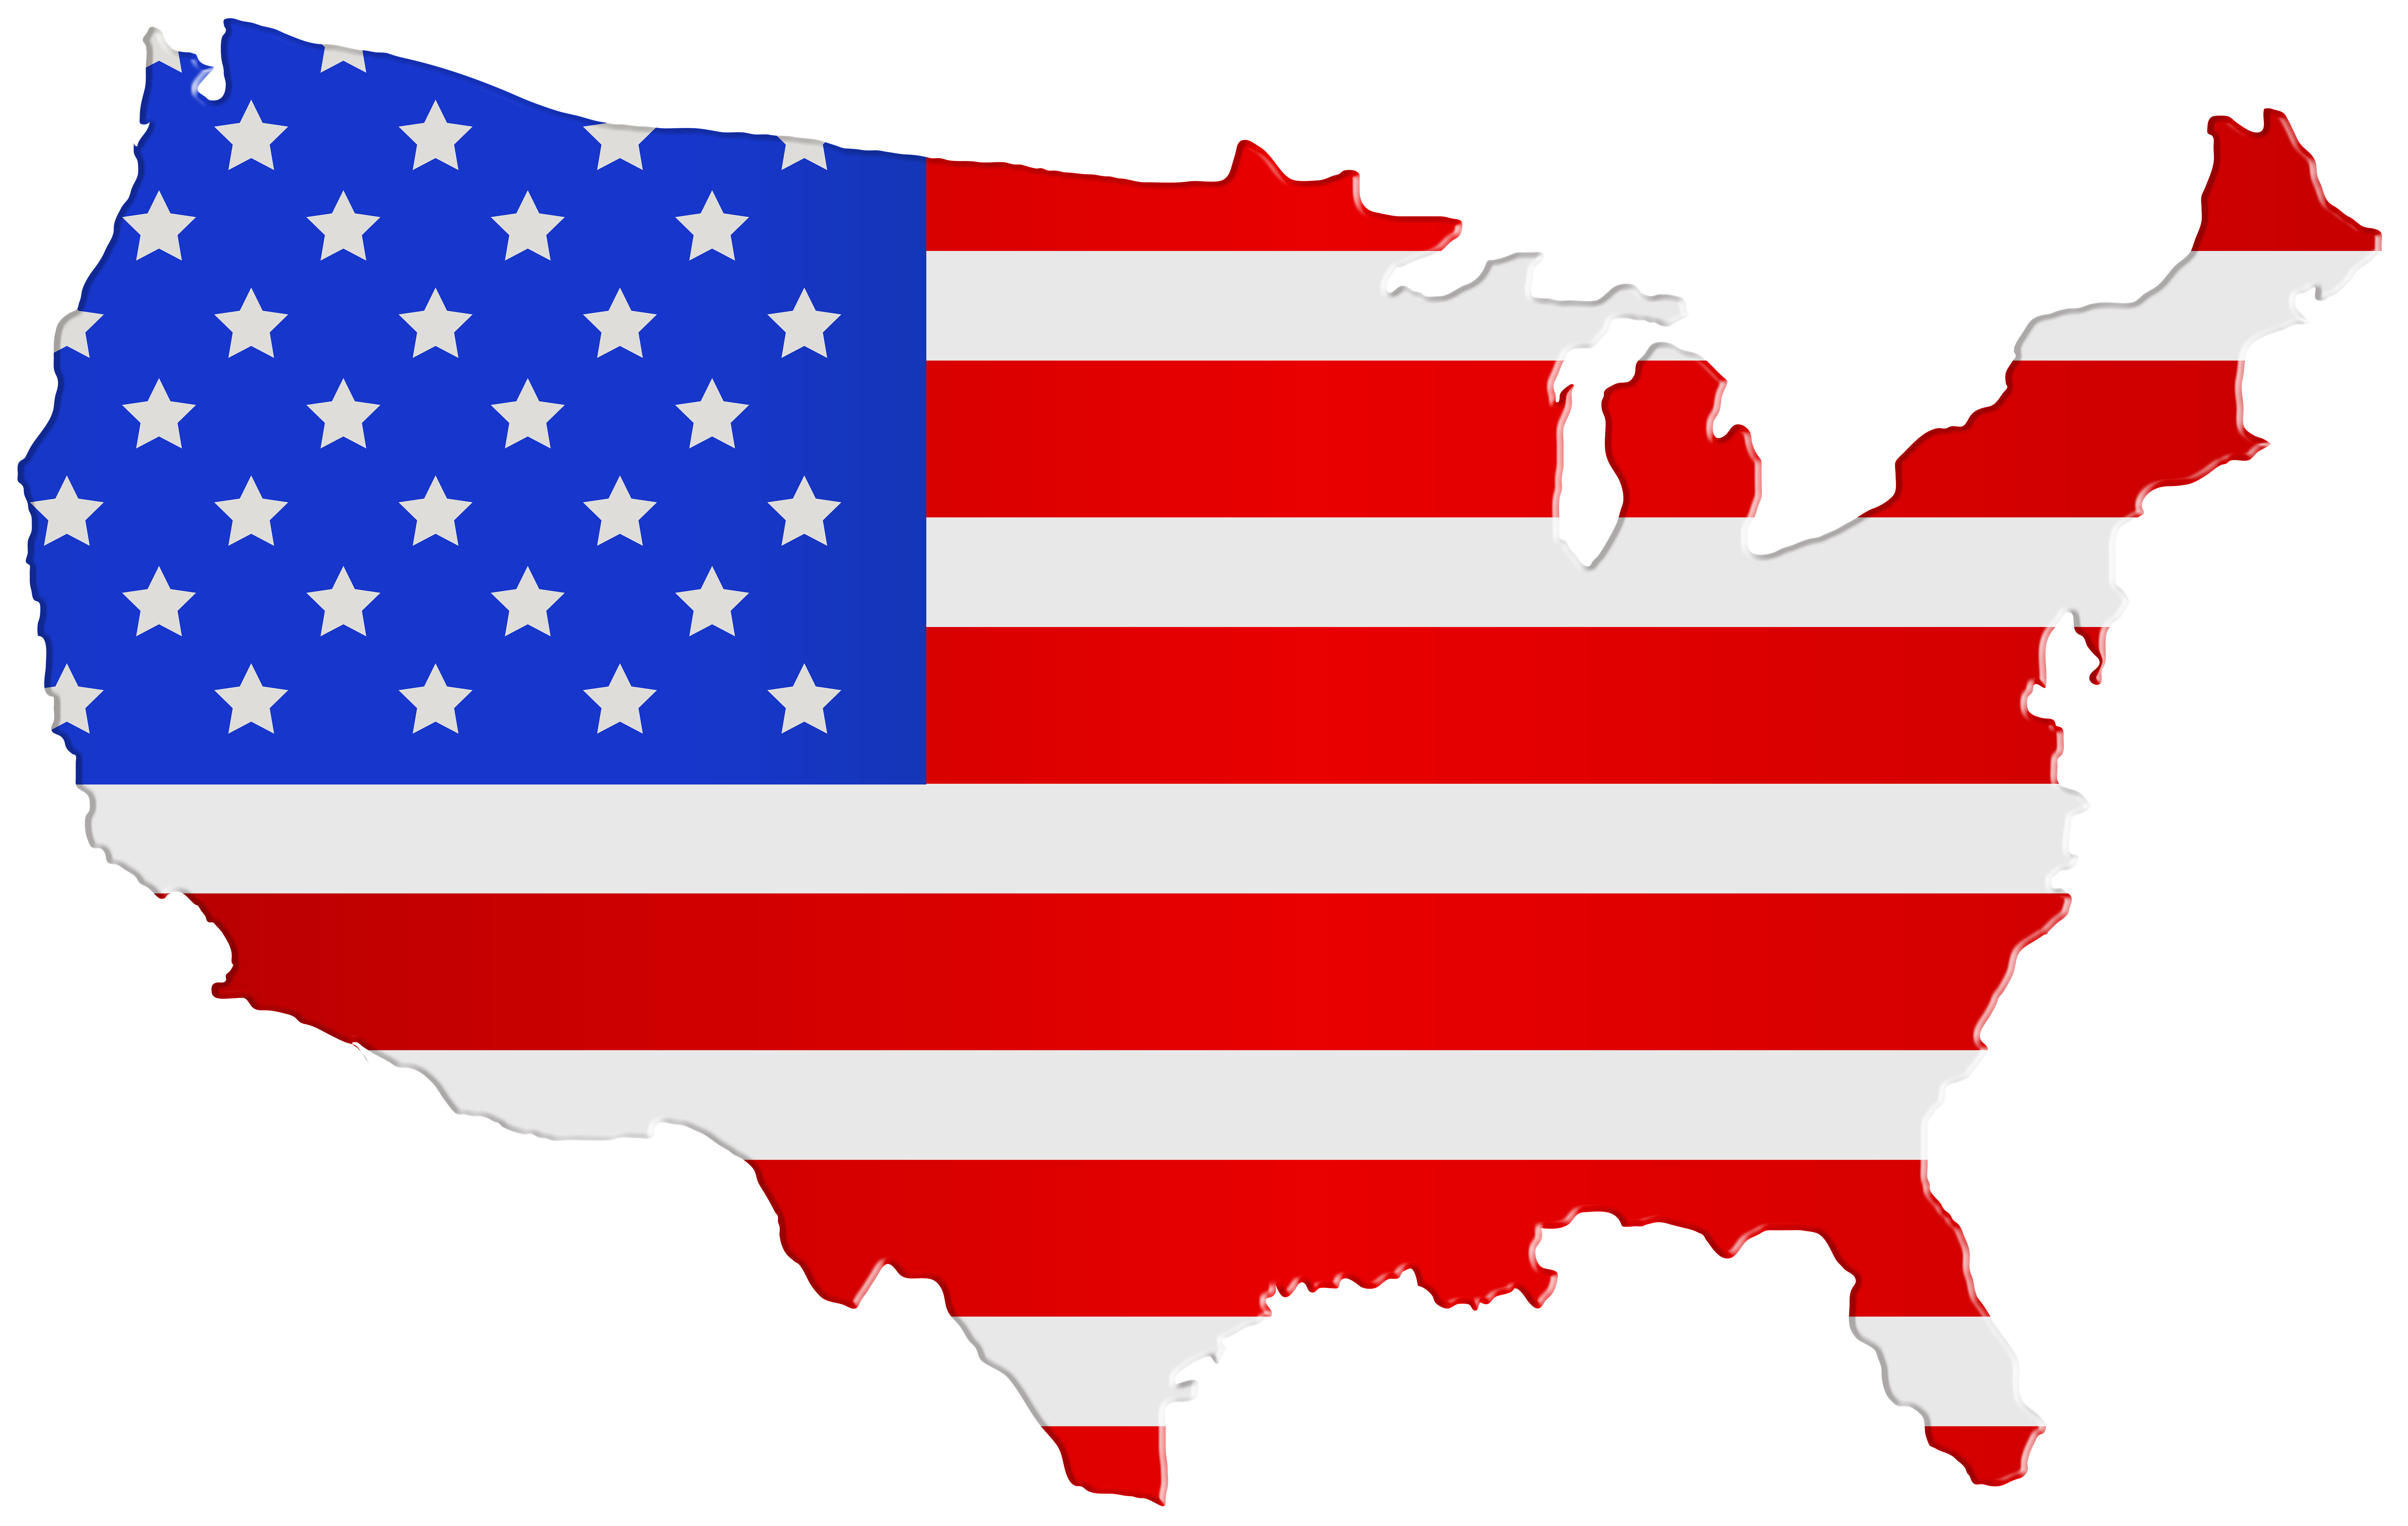 USA Map Flag PNG Clip Art Image